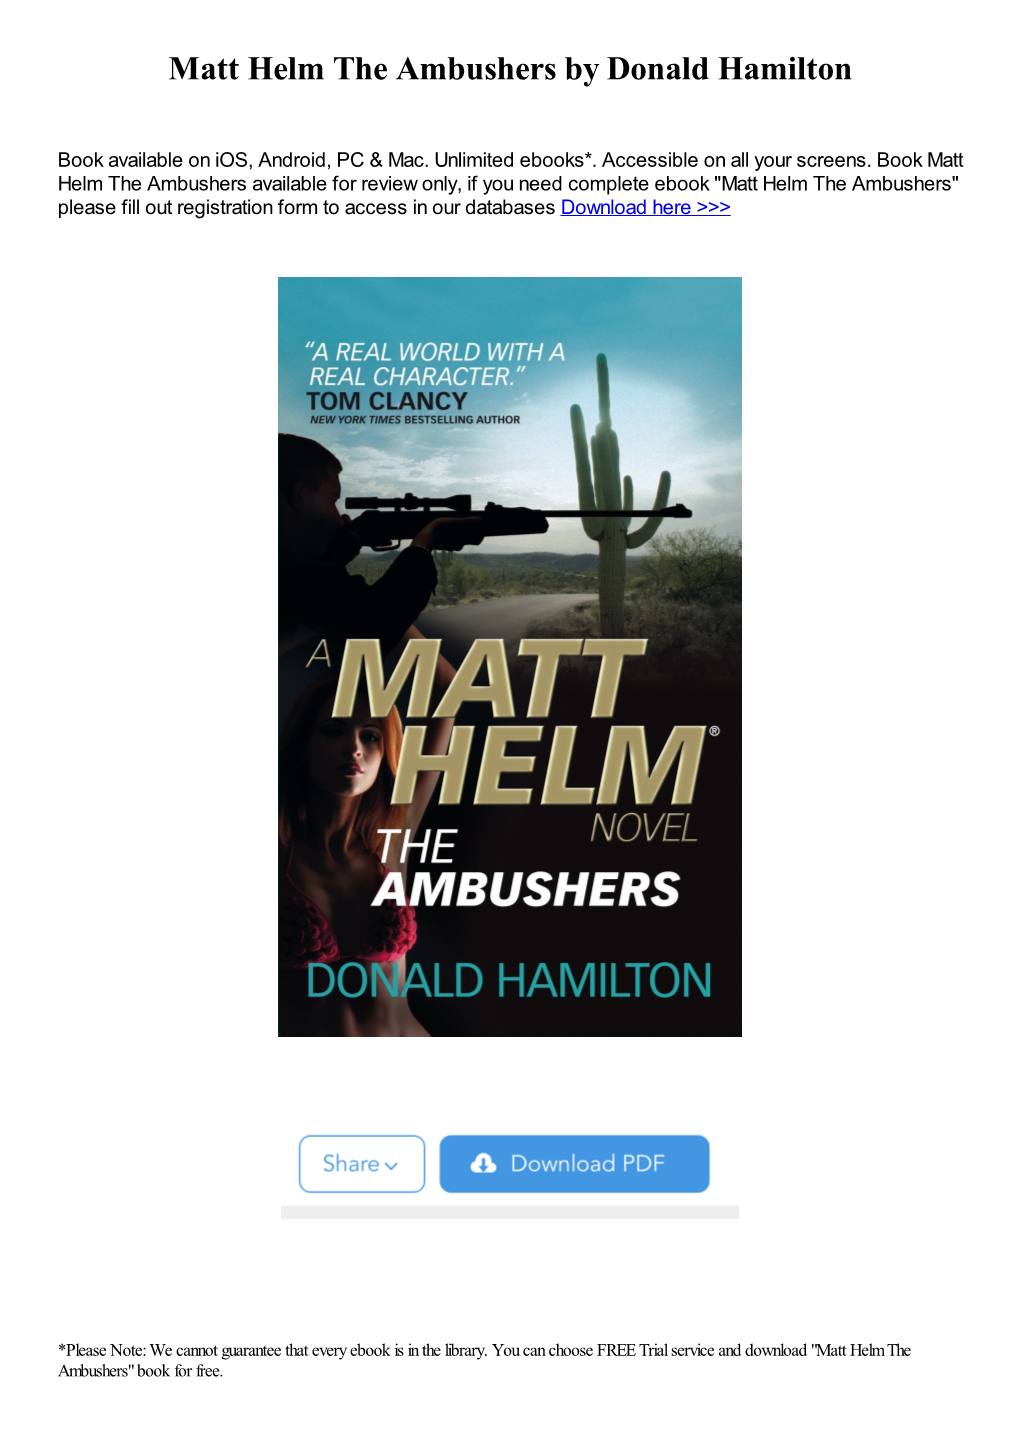 Matt Helm the Ambushers by Donald Hamilton